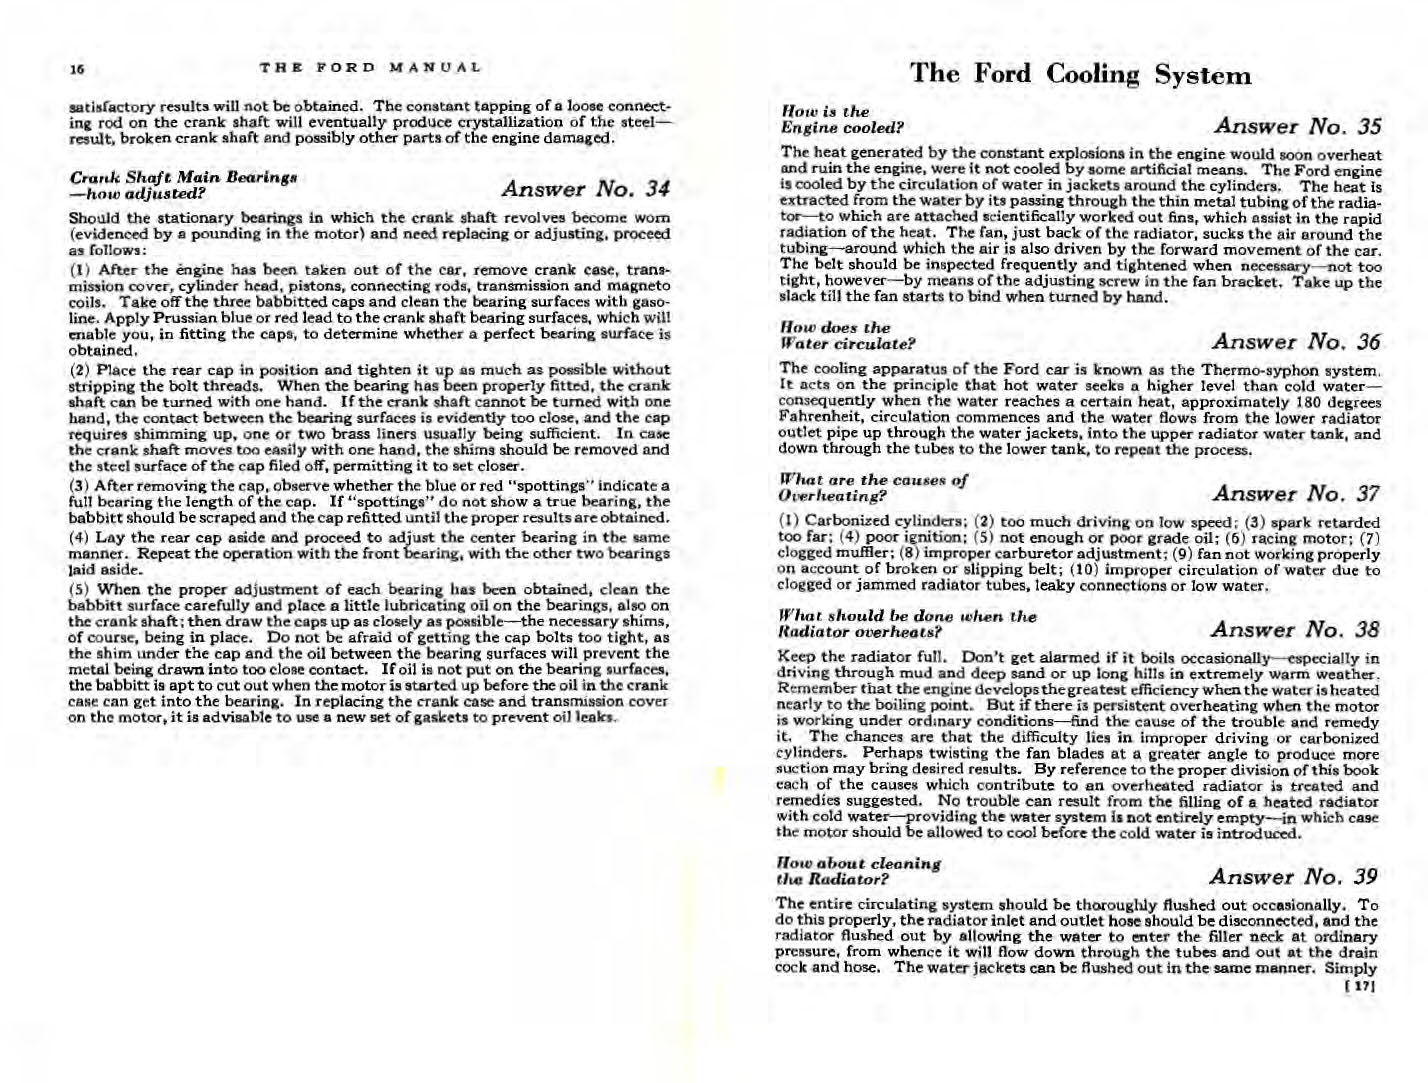 1922_Ford_Manual-16-17